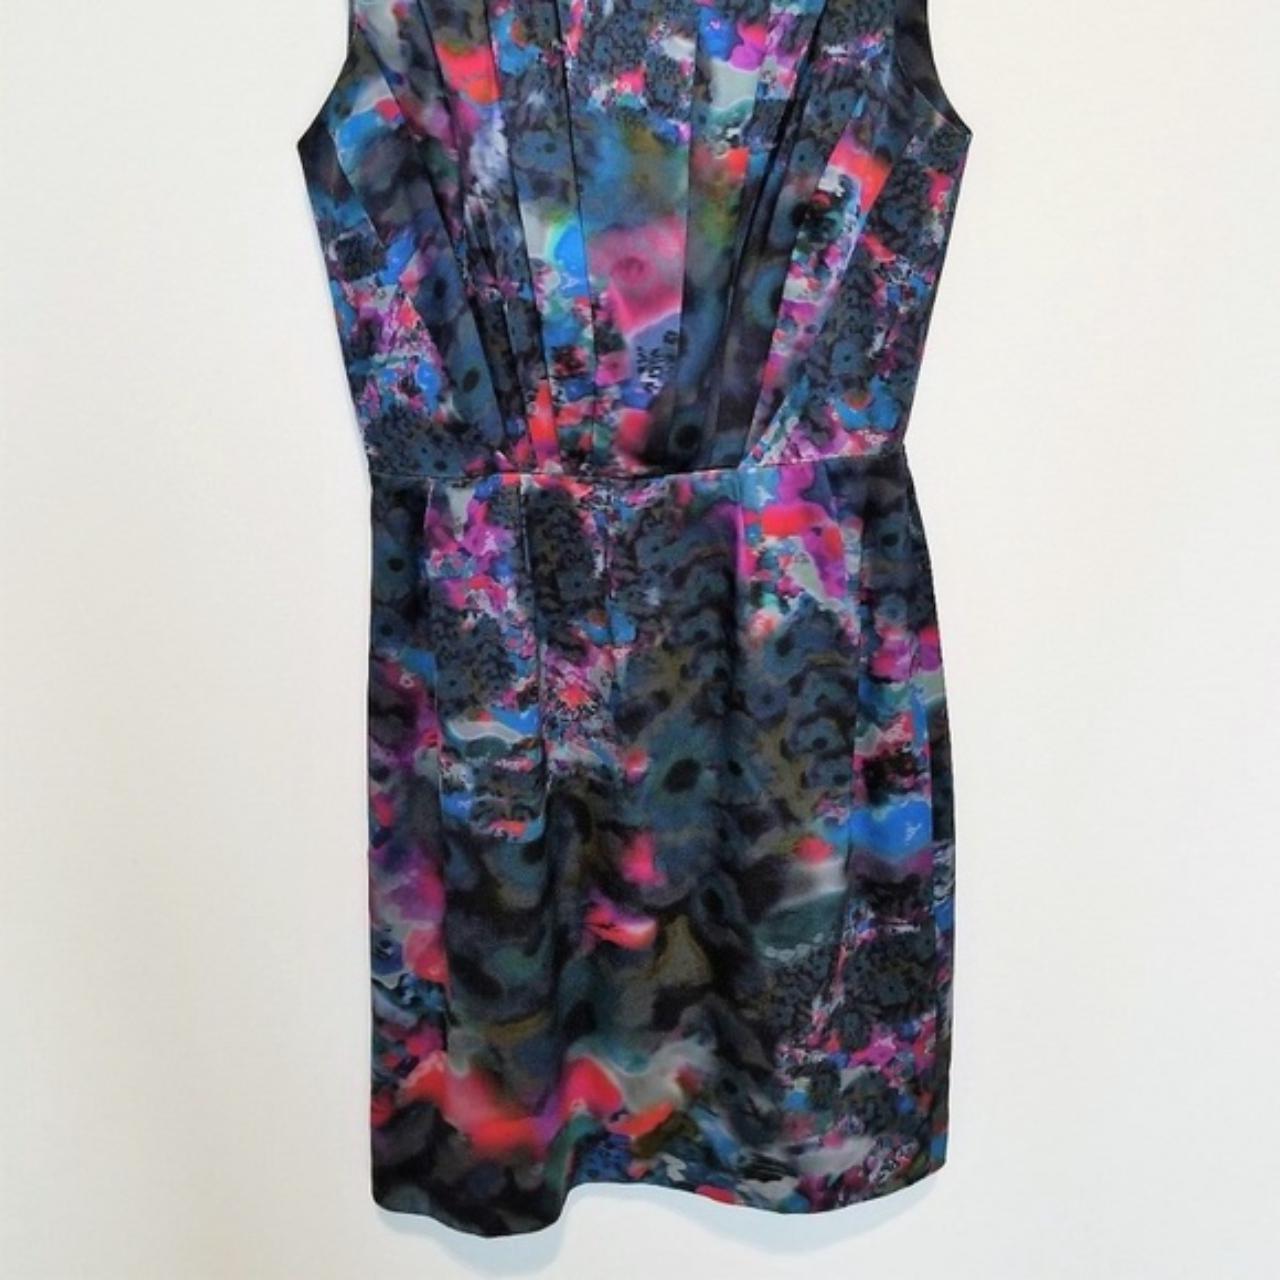 Product Image 2 - erdem floral silk sleeveless dress

beautiful